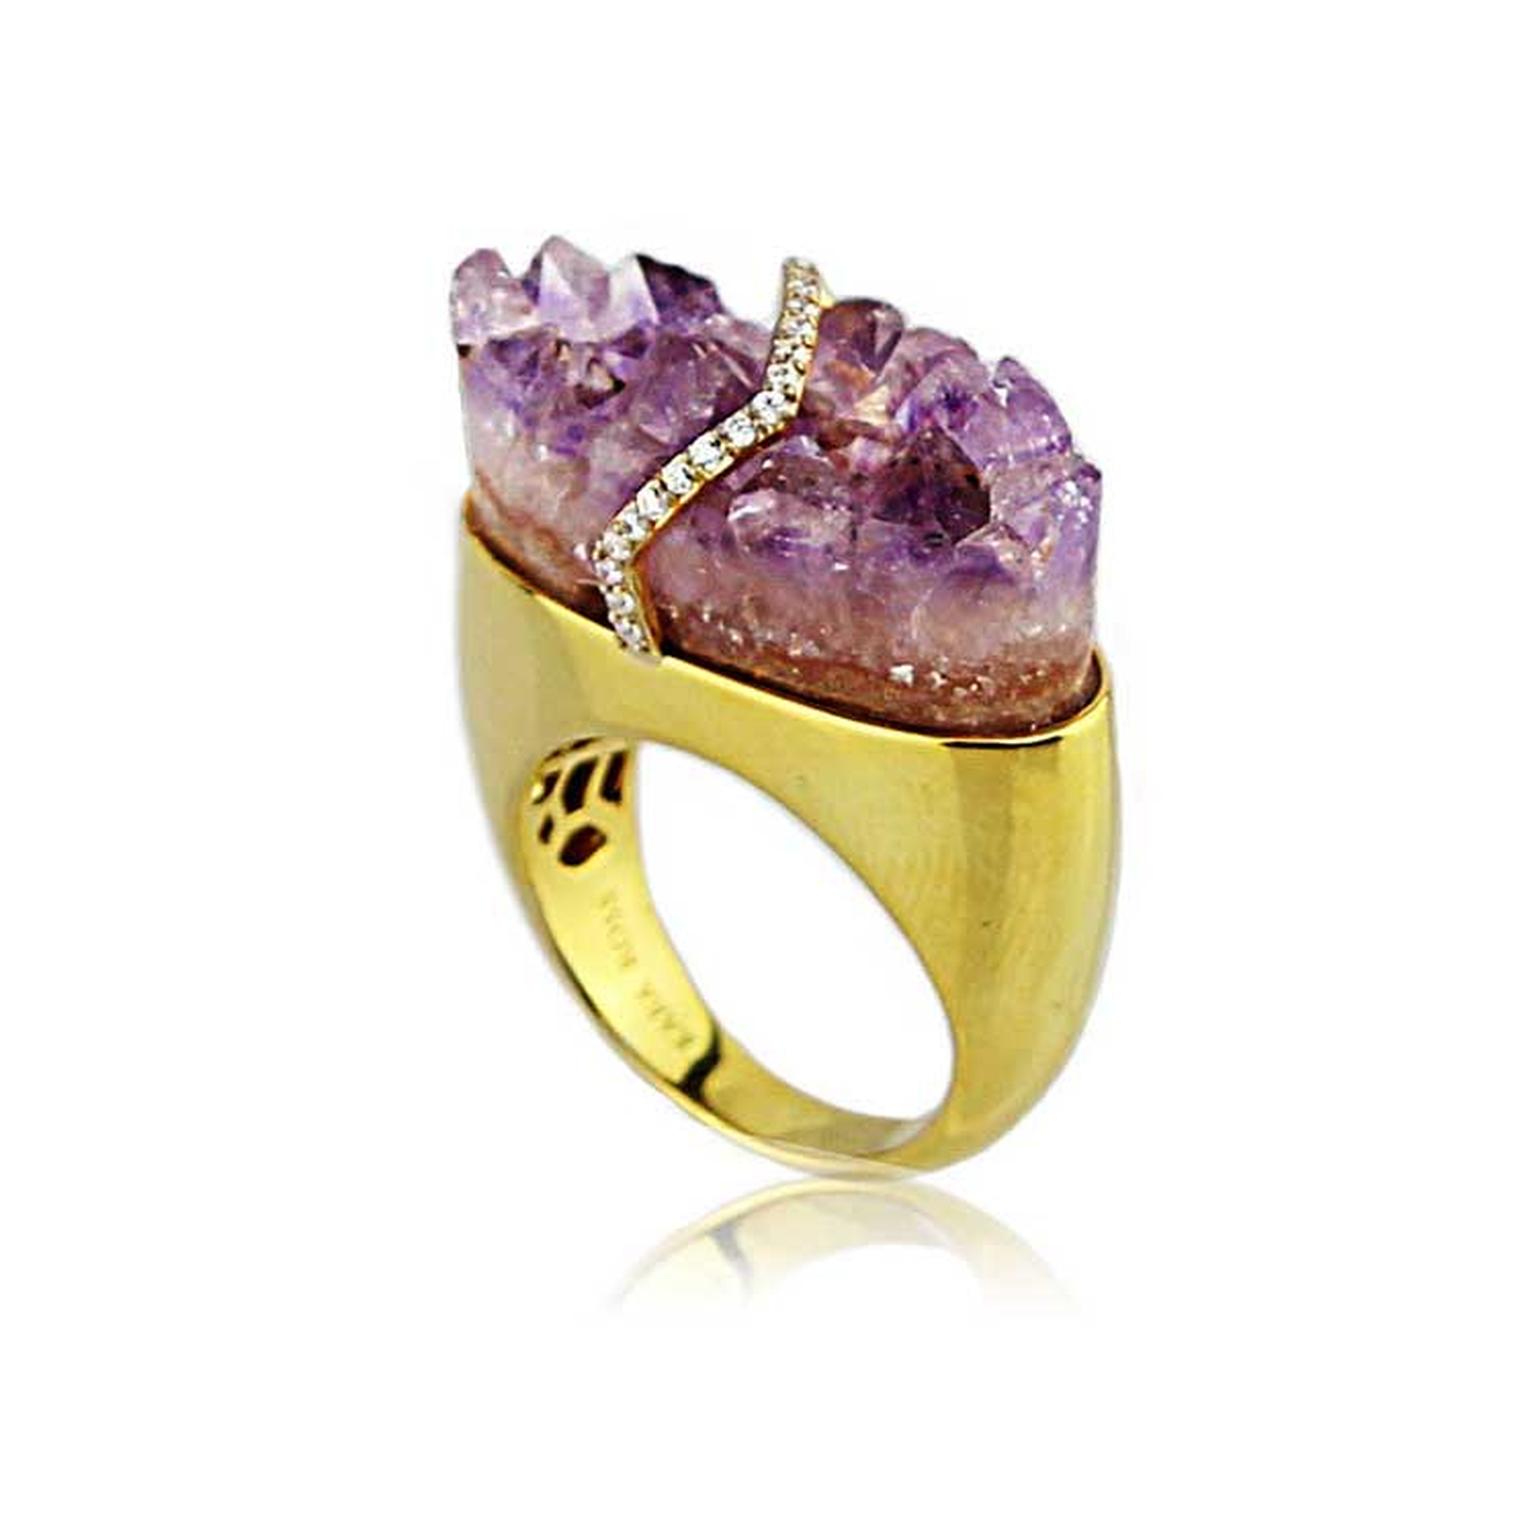 Kara Ross Pangea ring with raw amethyst and diamonds